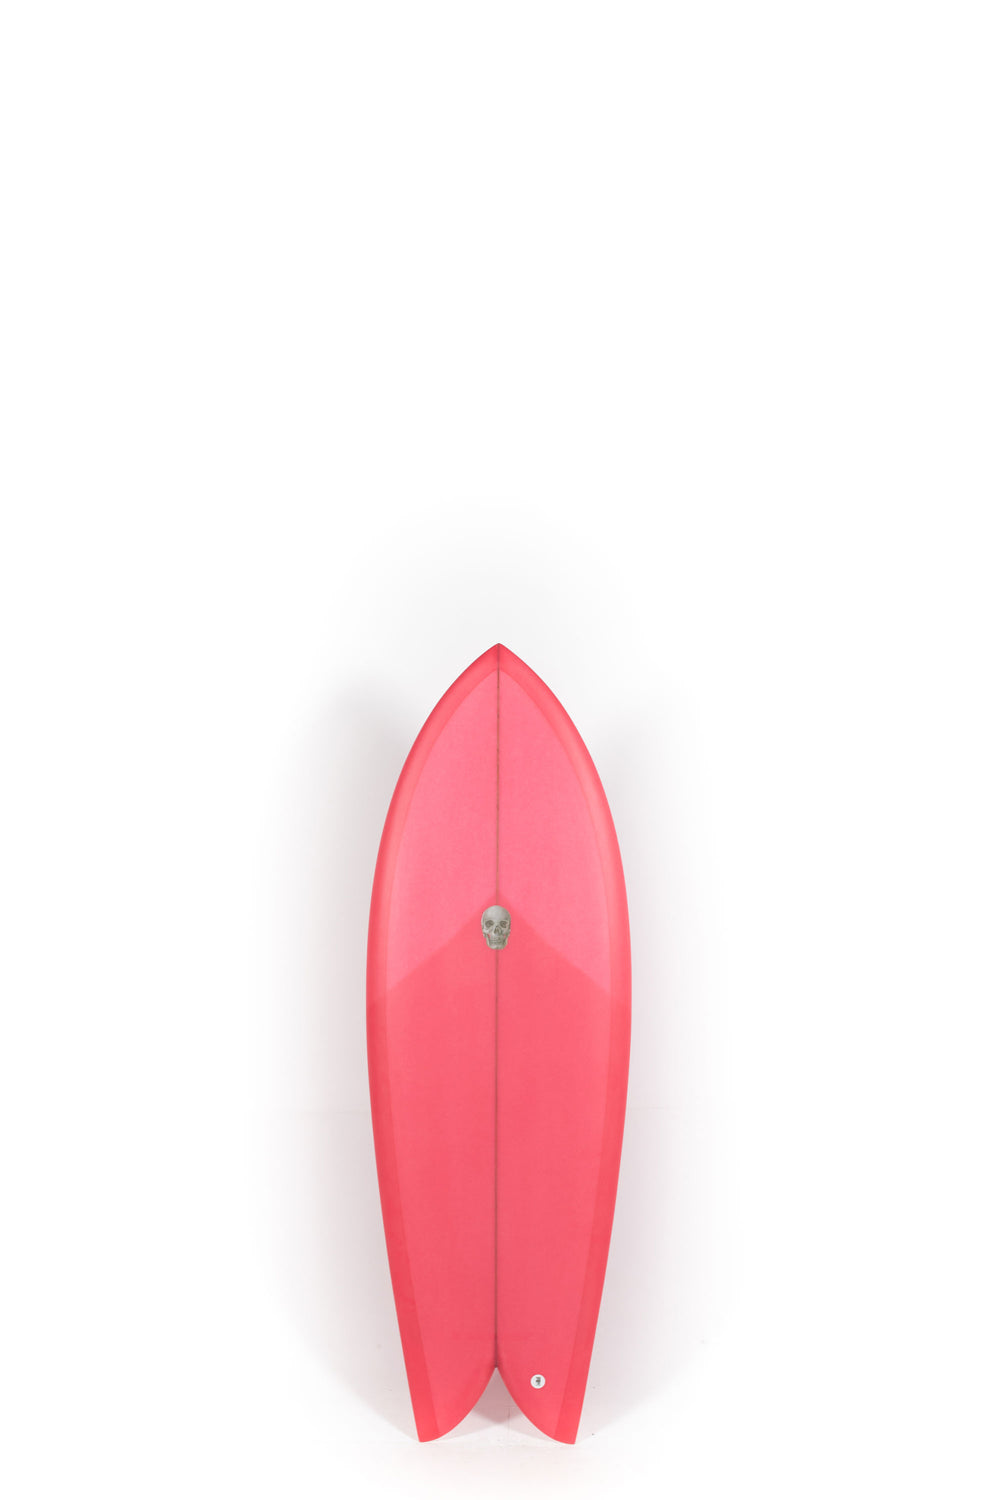 Pukas Surf Shop - Christenson Surfboards - CHRIS FISH - 5'2